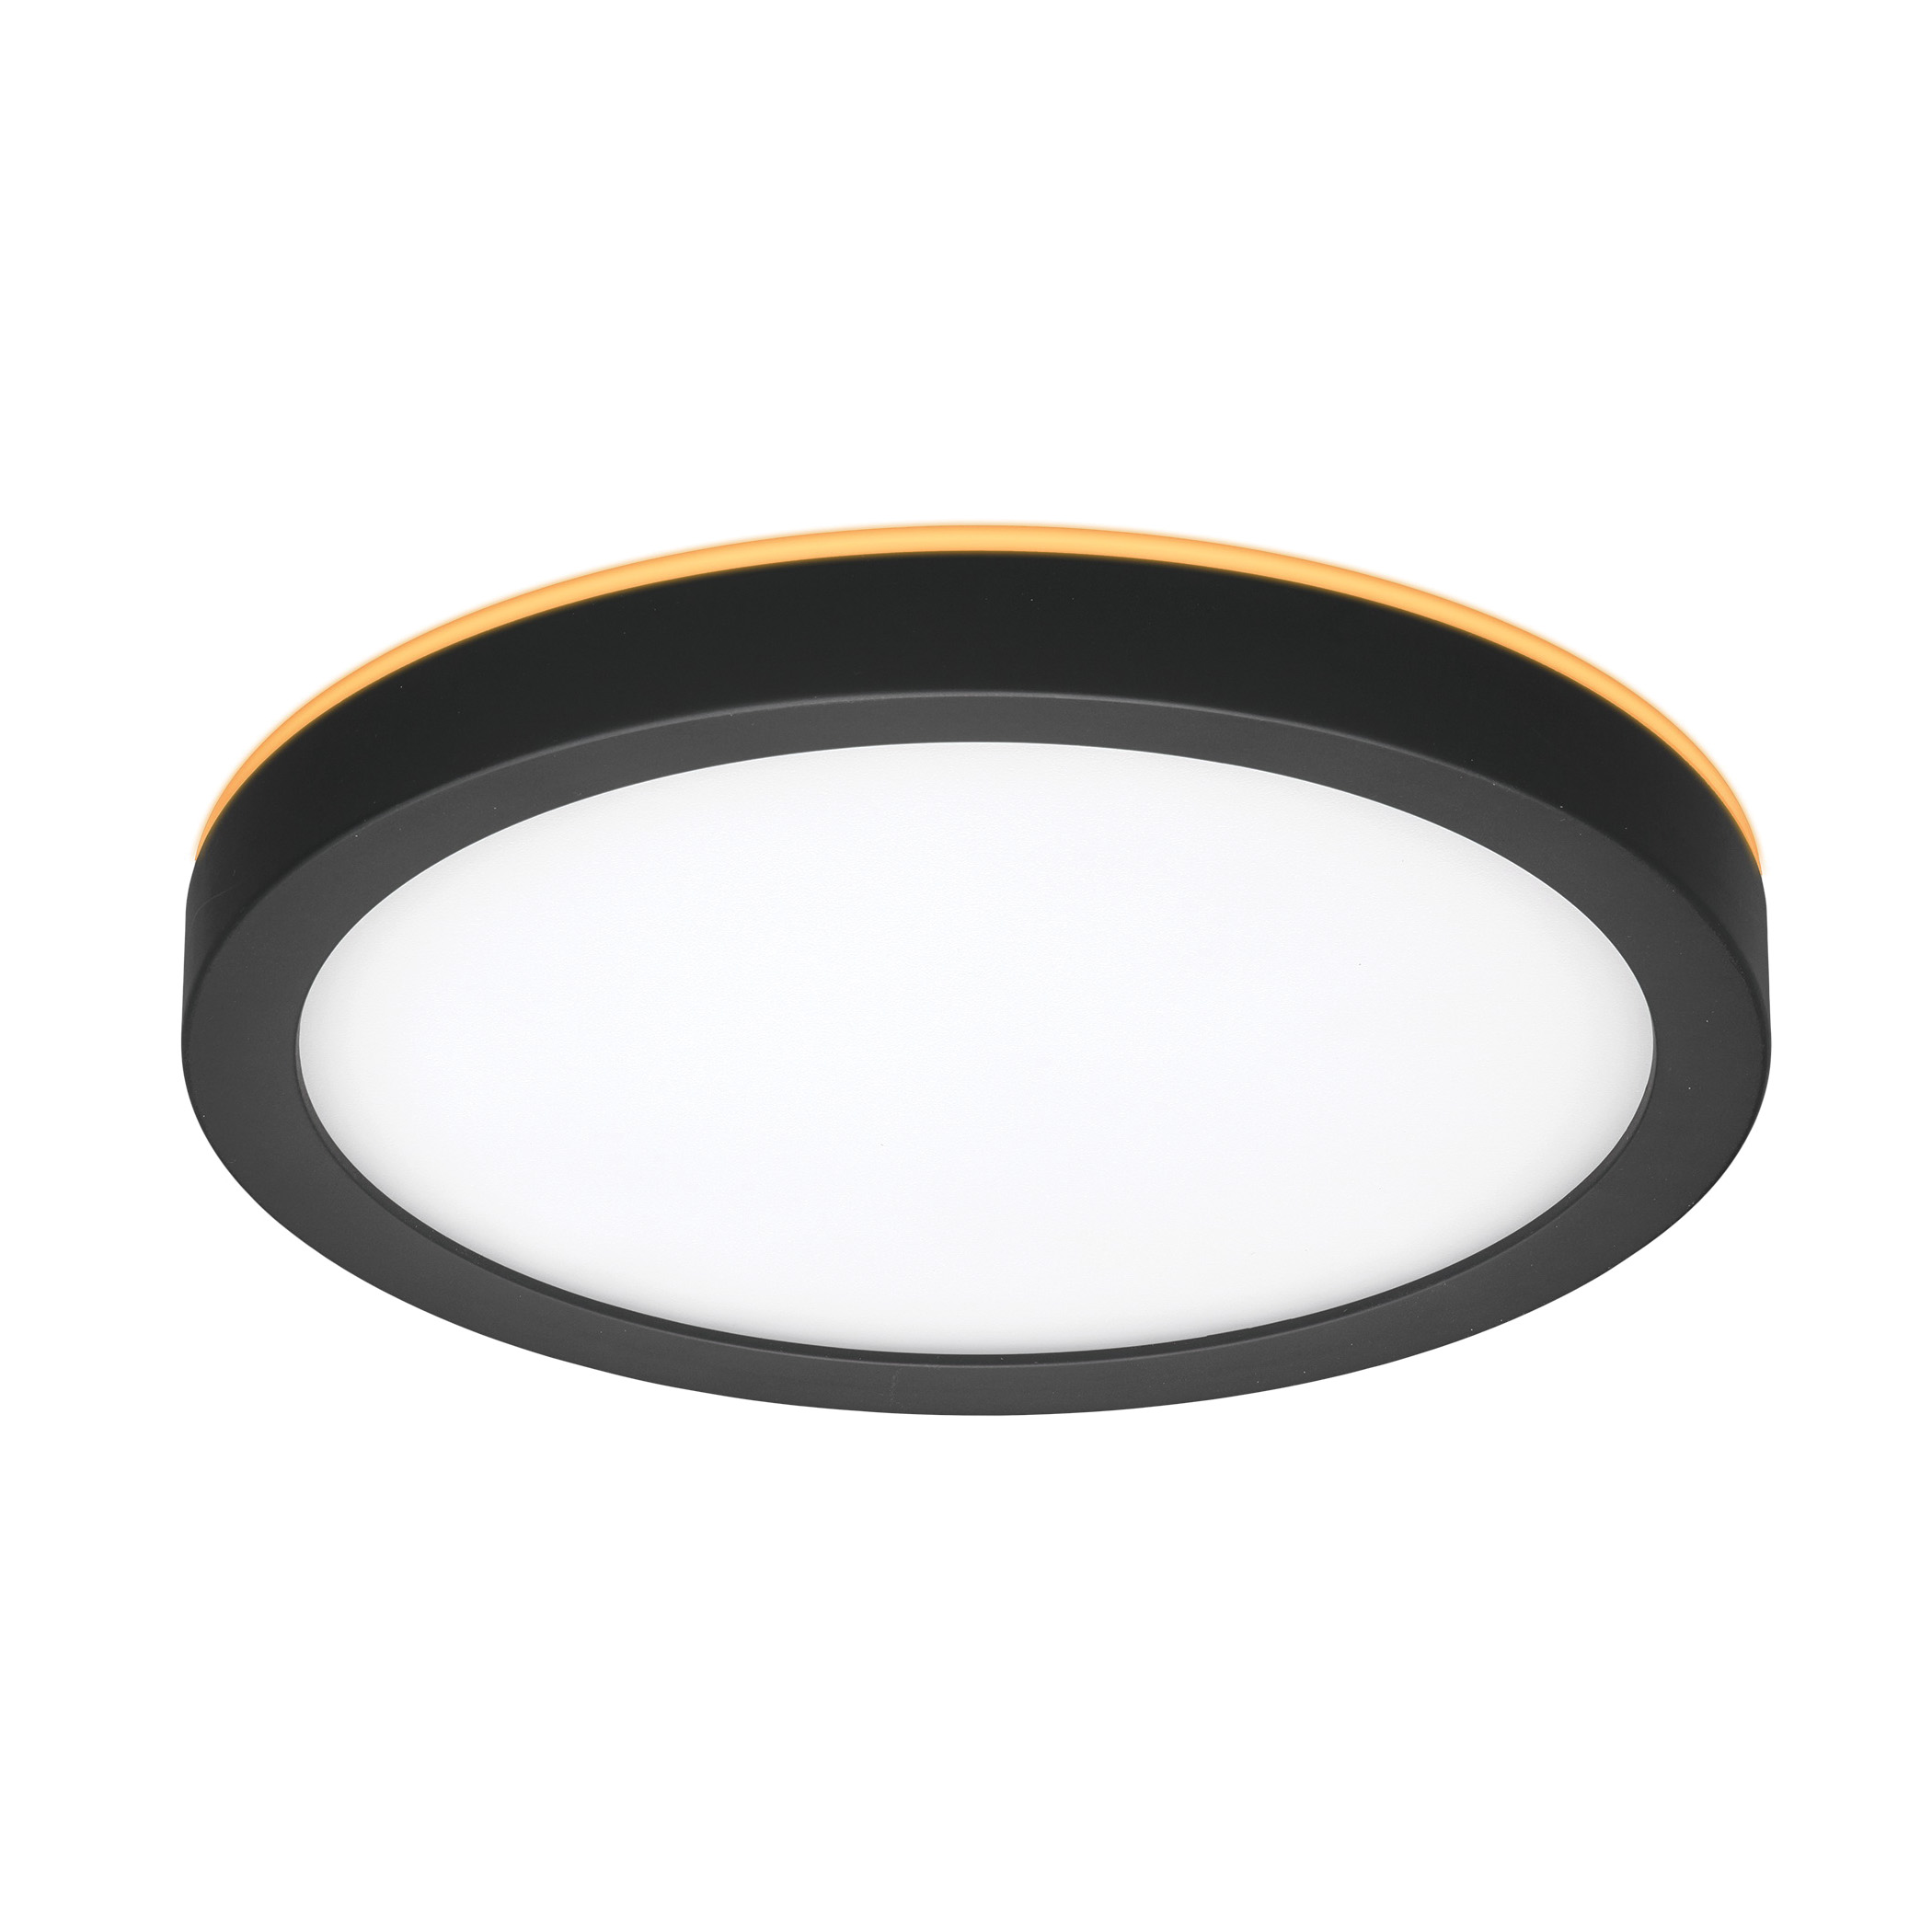 ETI LowPro Series 56568115 Ceiling Light with Nightlight, 120 V, 12 W, Integrated LED Lamp, 800 Lumens, Black Fixture